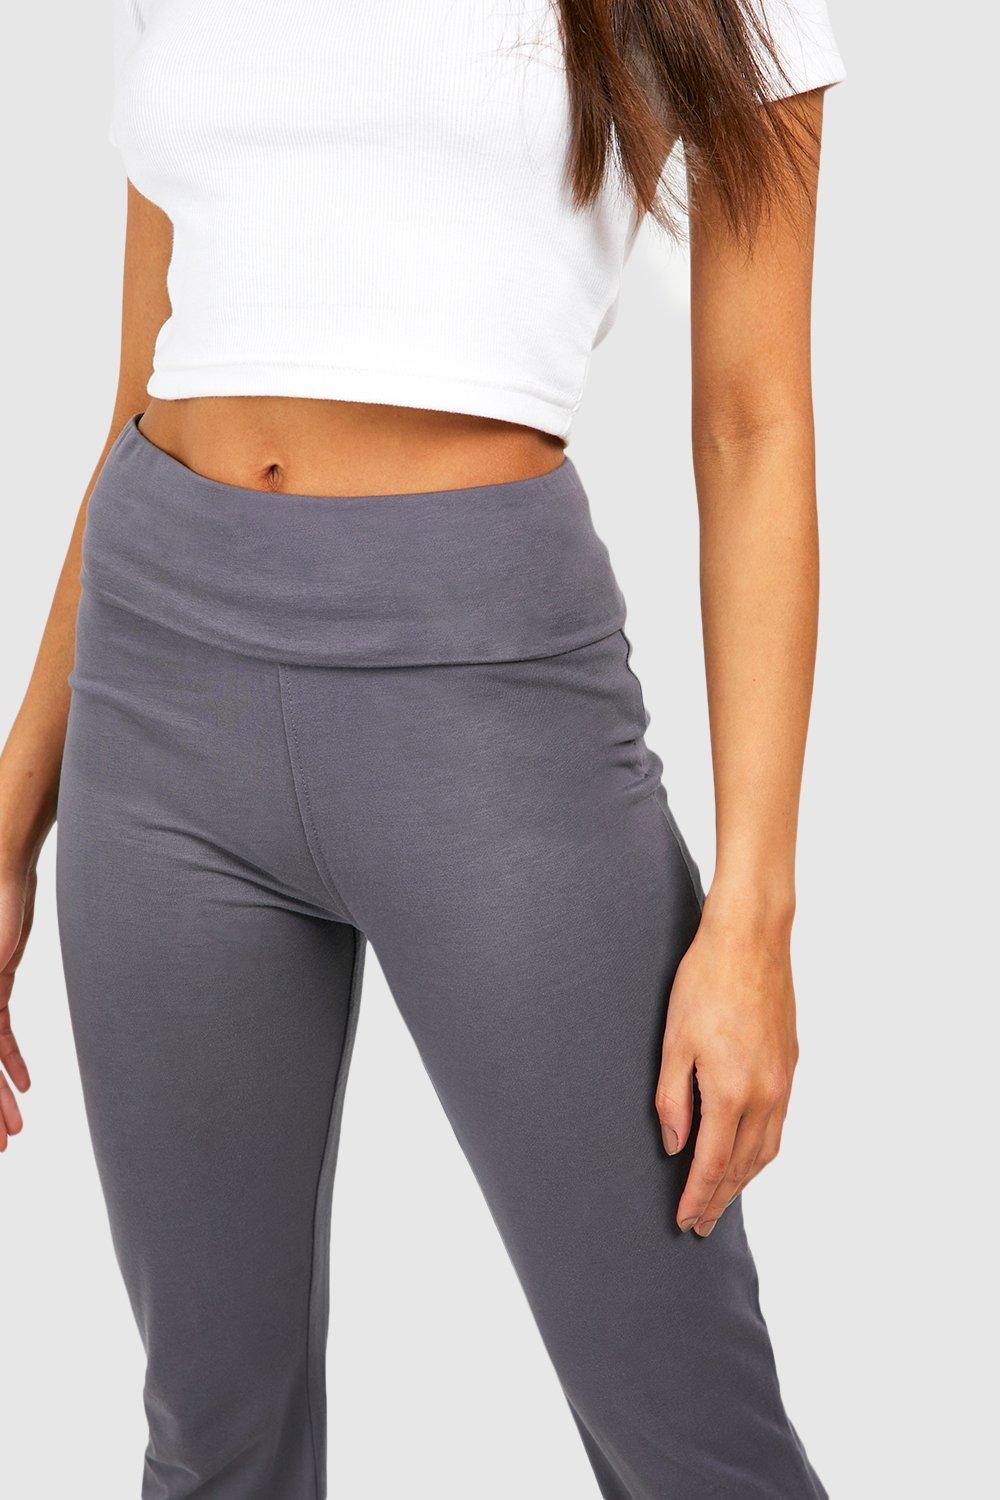 Women's Cotton Flare Yoga Pants Fold Over Waistband – JJJ Fashion